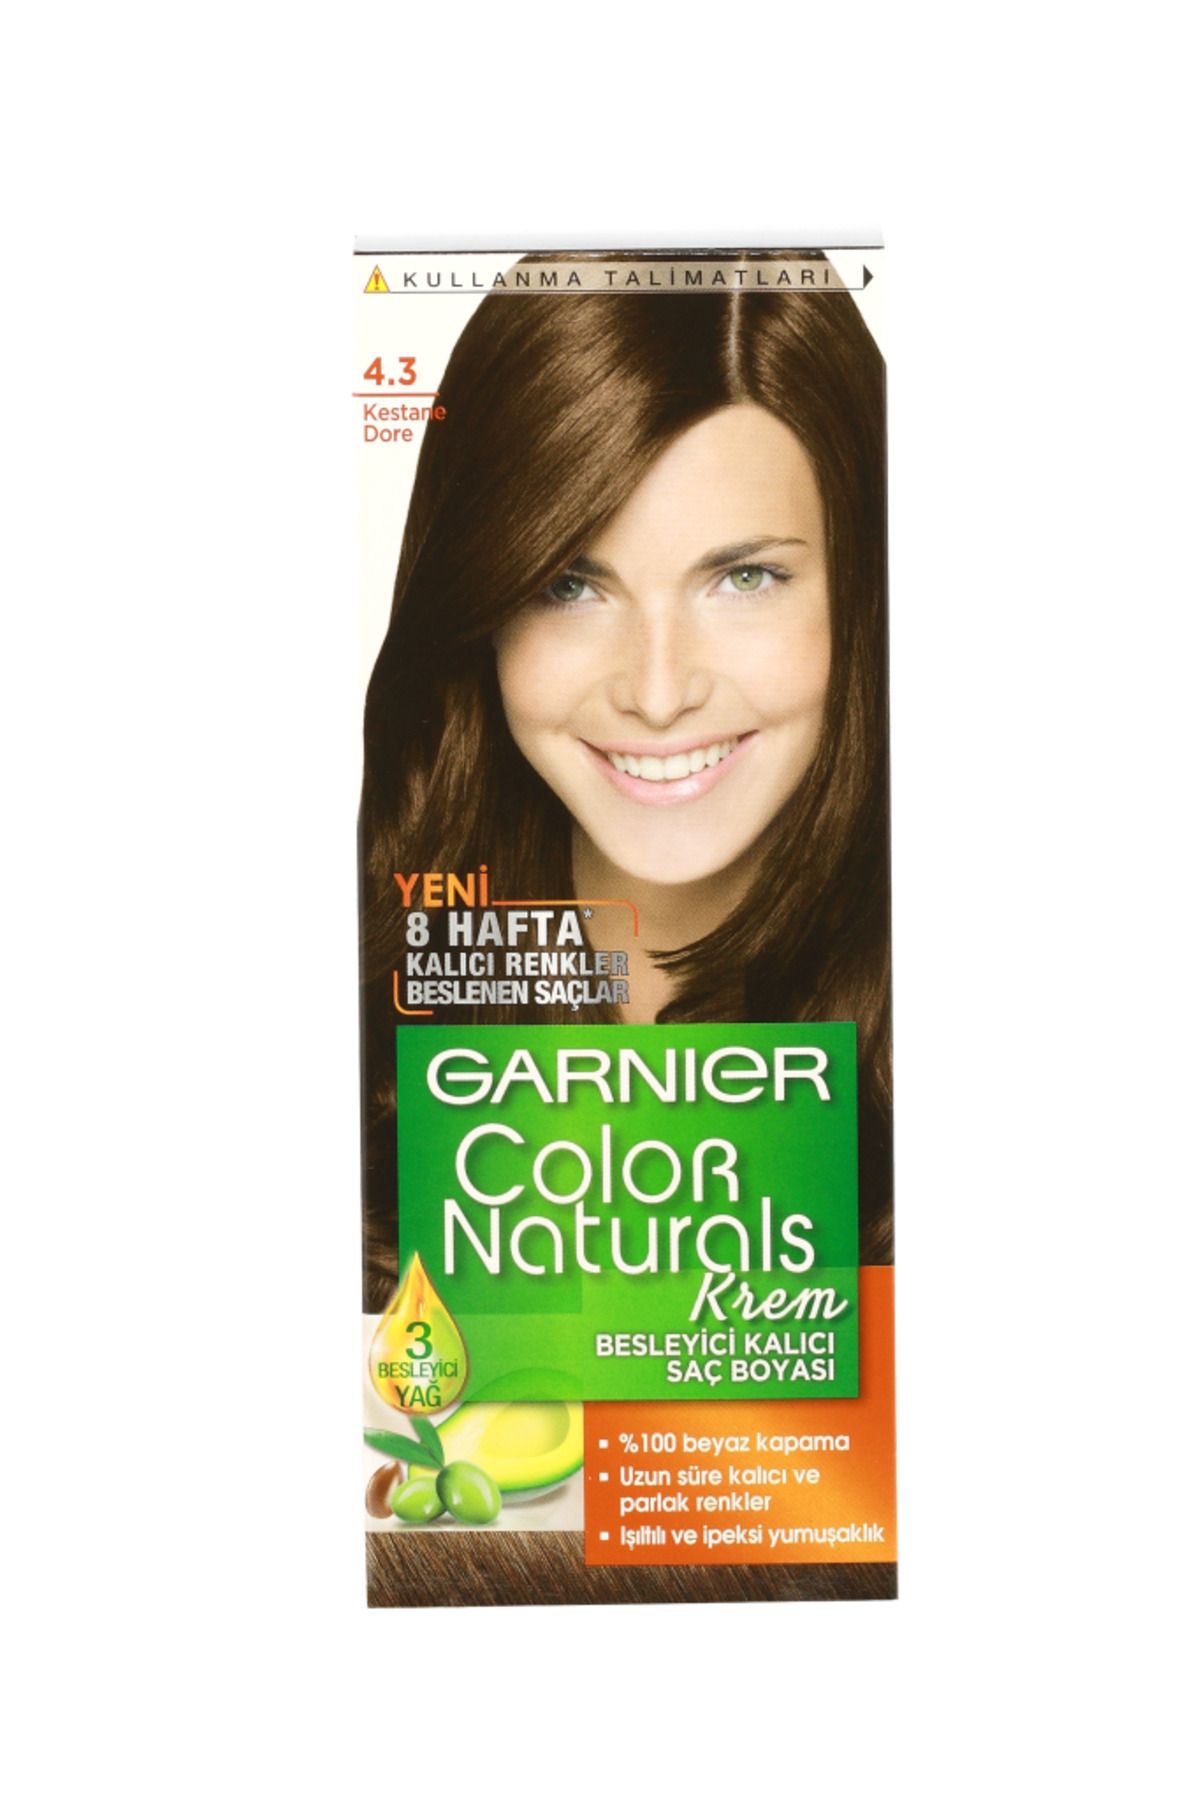 Garnier Color Naturals Saç Boyası 4.3 Kestane Dore